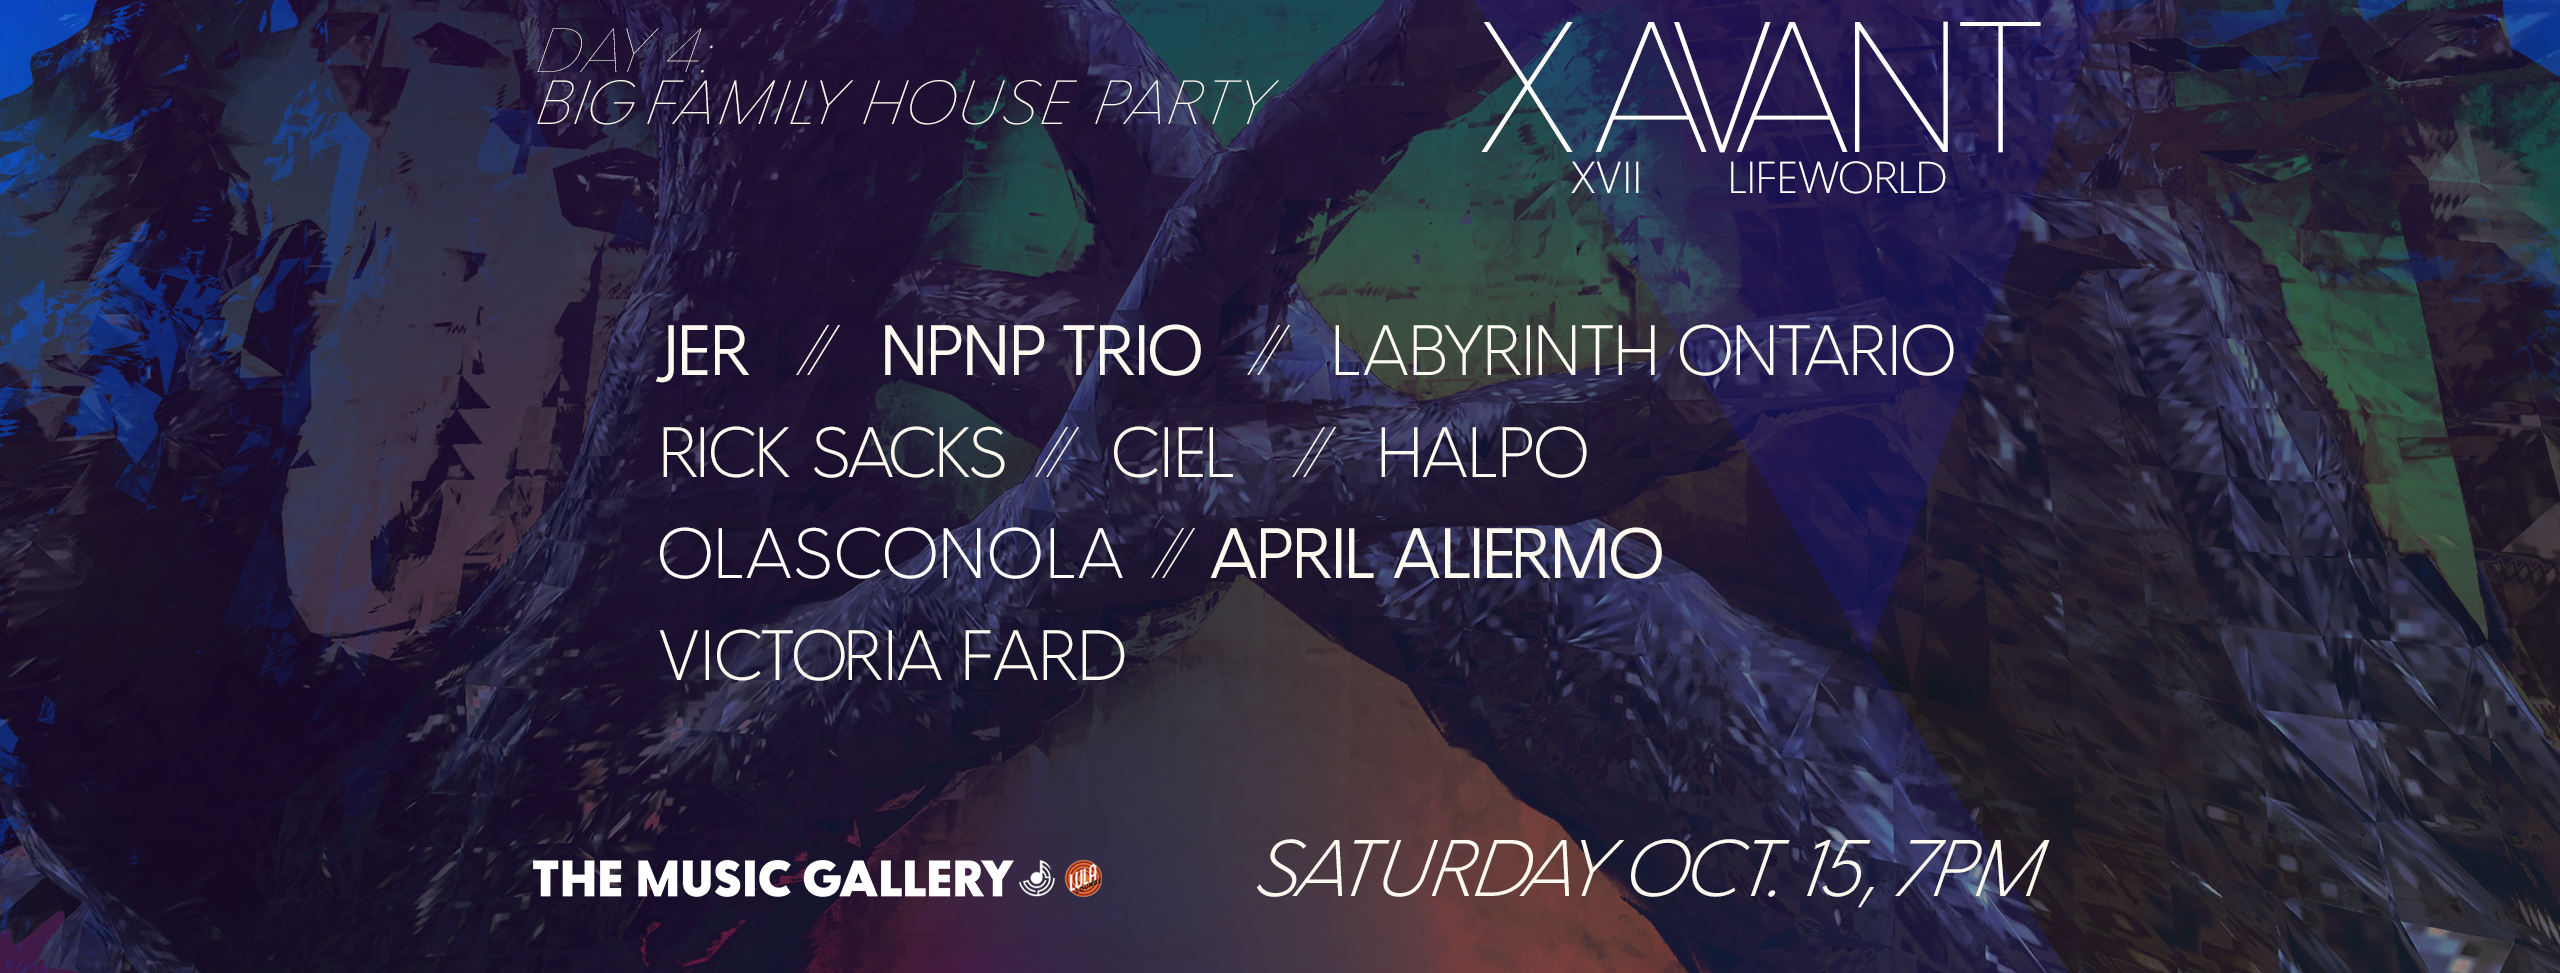 X Avant XVII: LifeWorld Night 4: Big Family House Party Oct 15 The Music Gallery